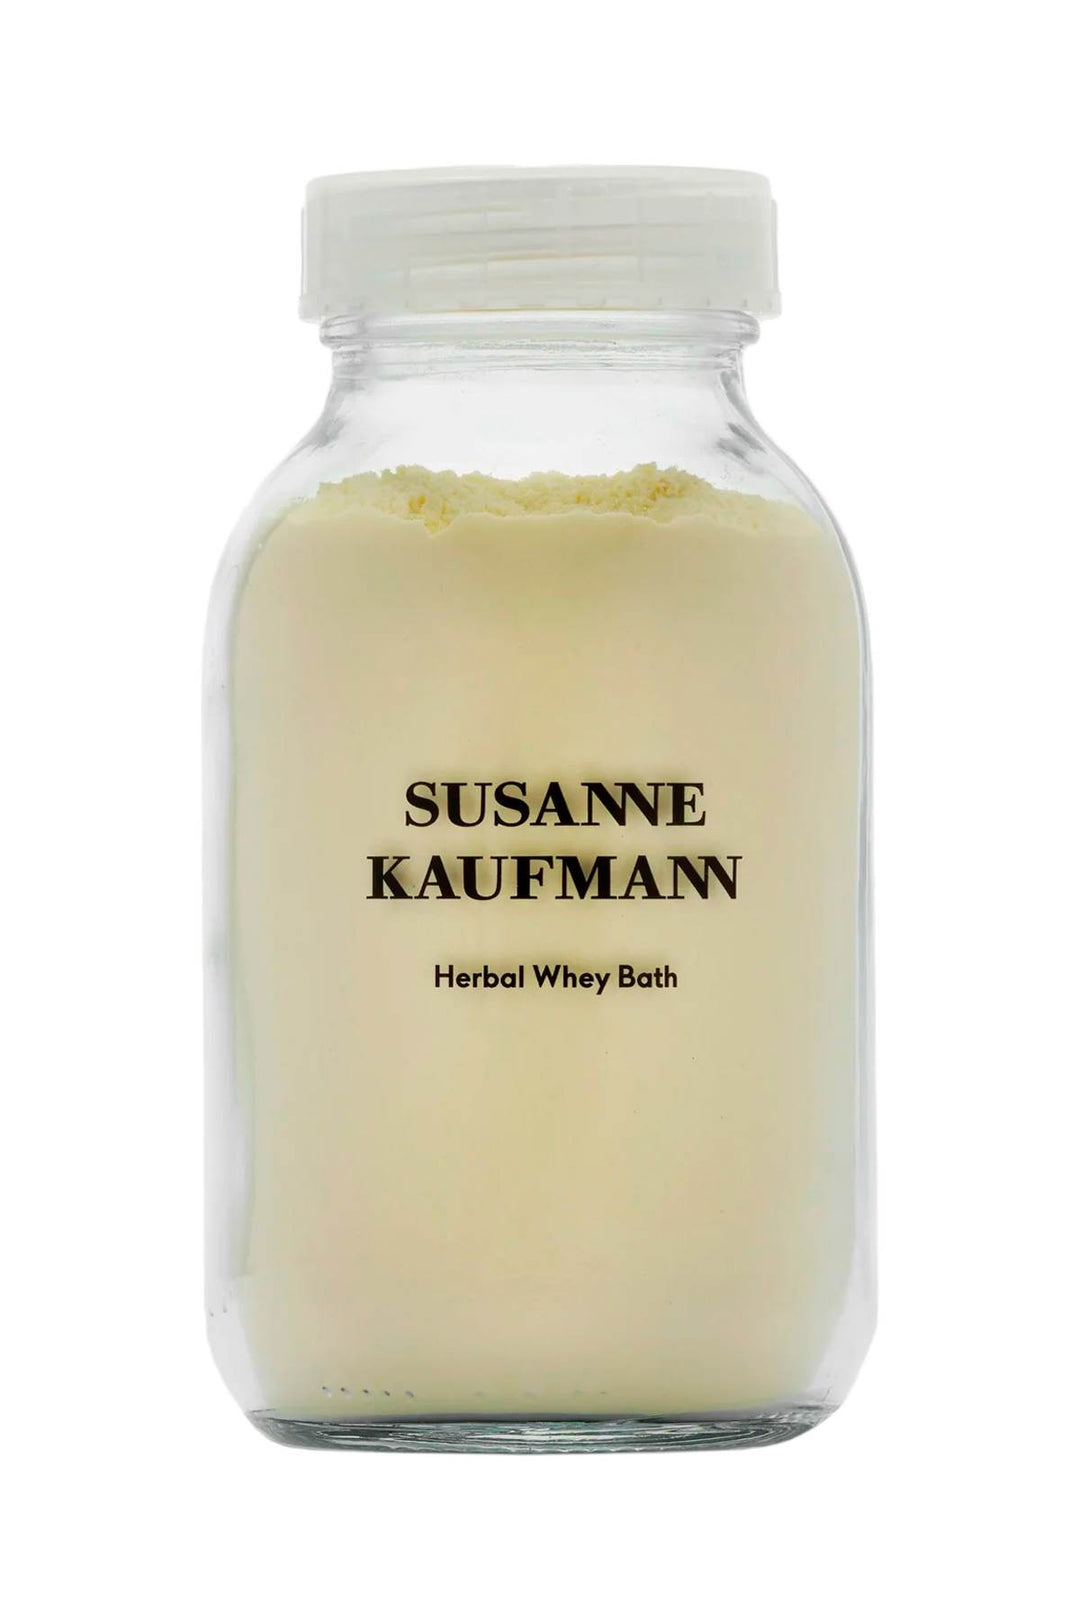 Susanne kaufmann herbal whey bath - 330 g-0